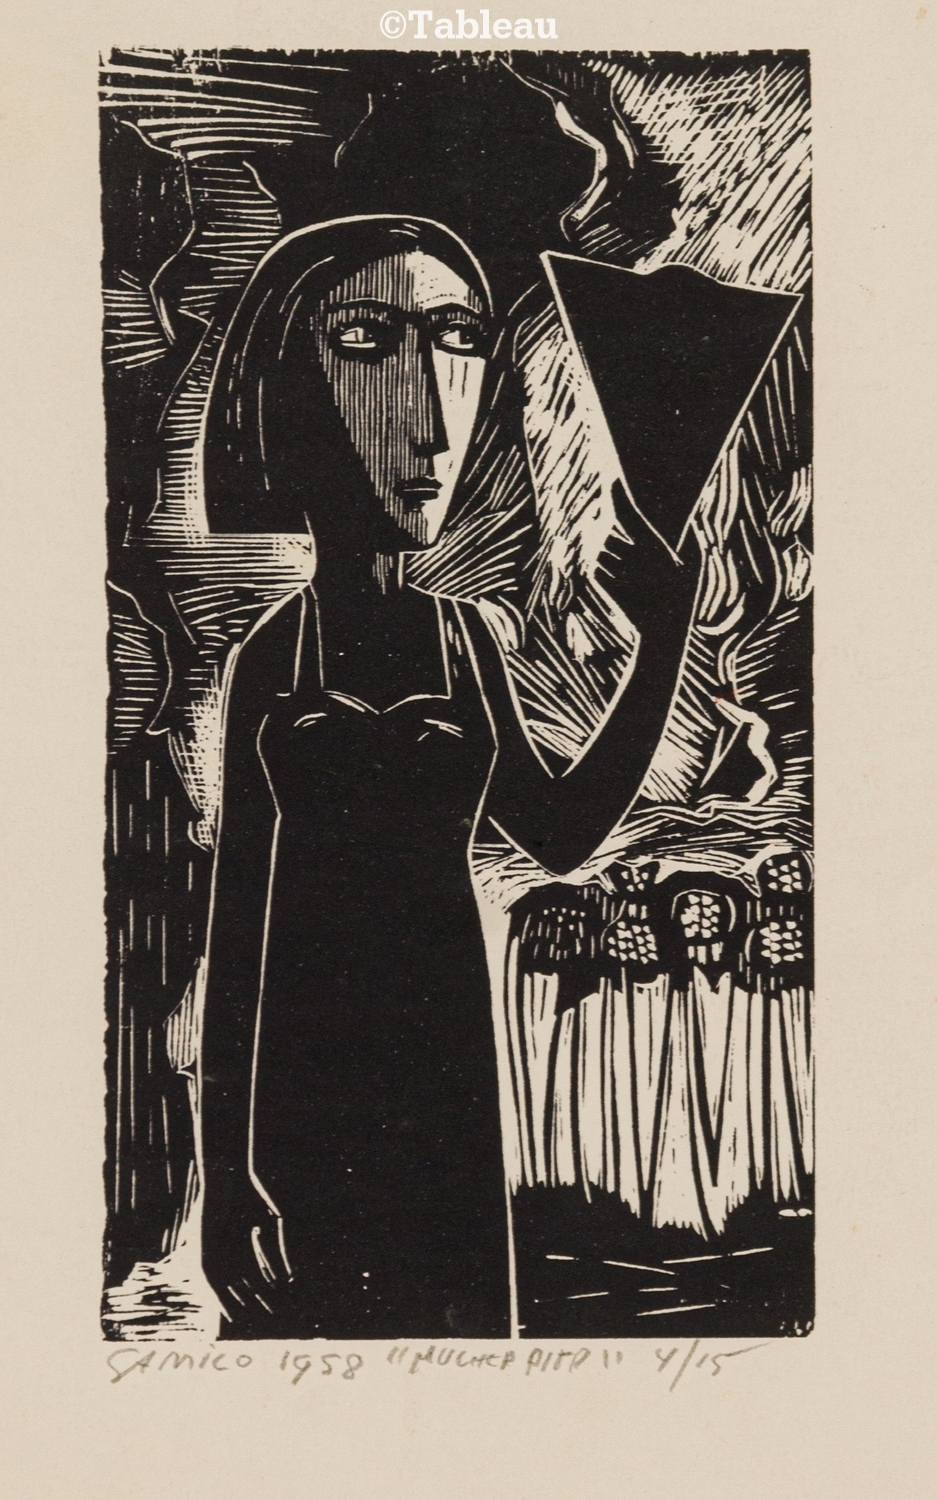 "Mulher pira" by Gilvan José Meira Lins Samico, 1958